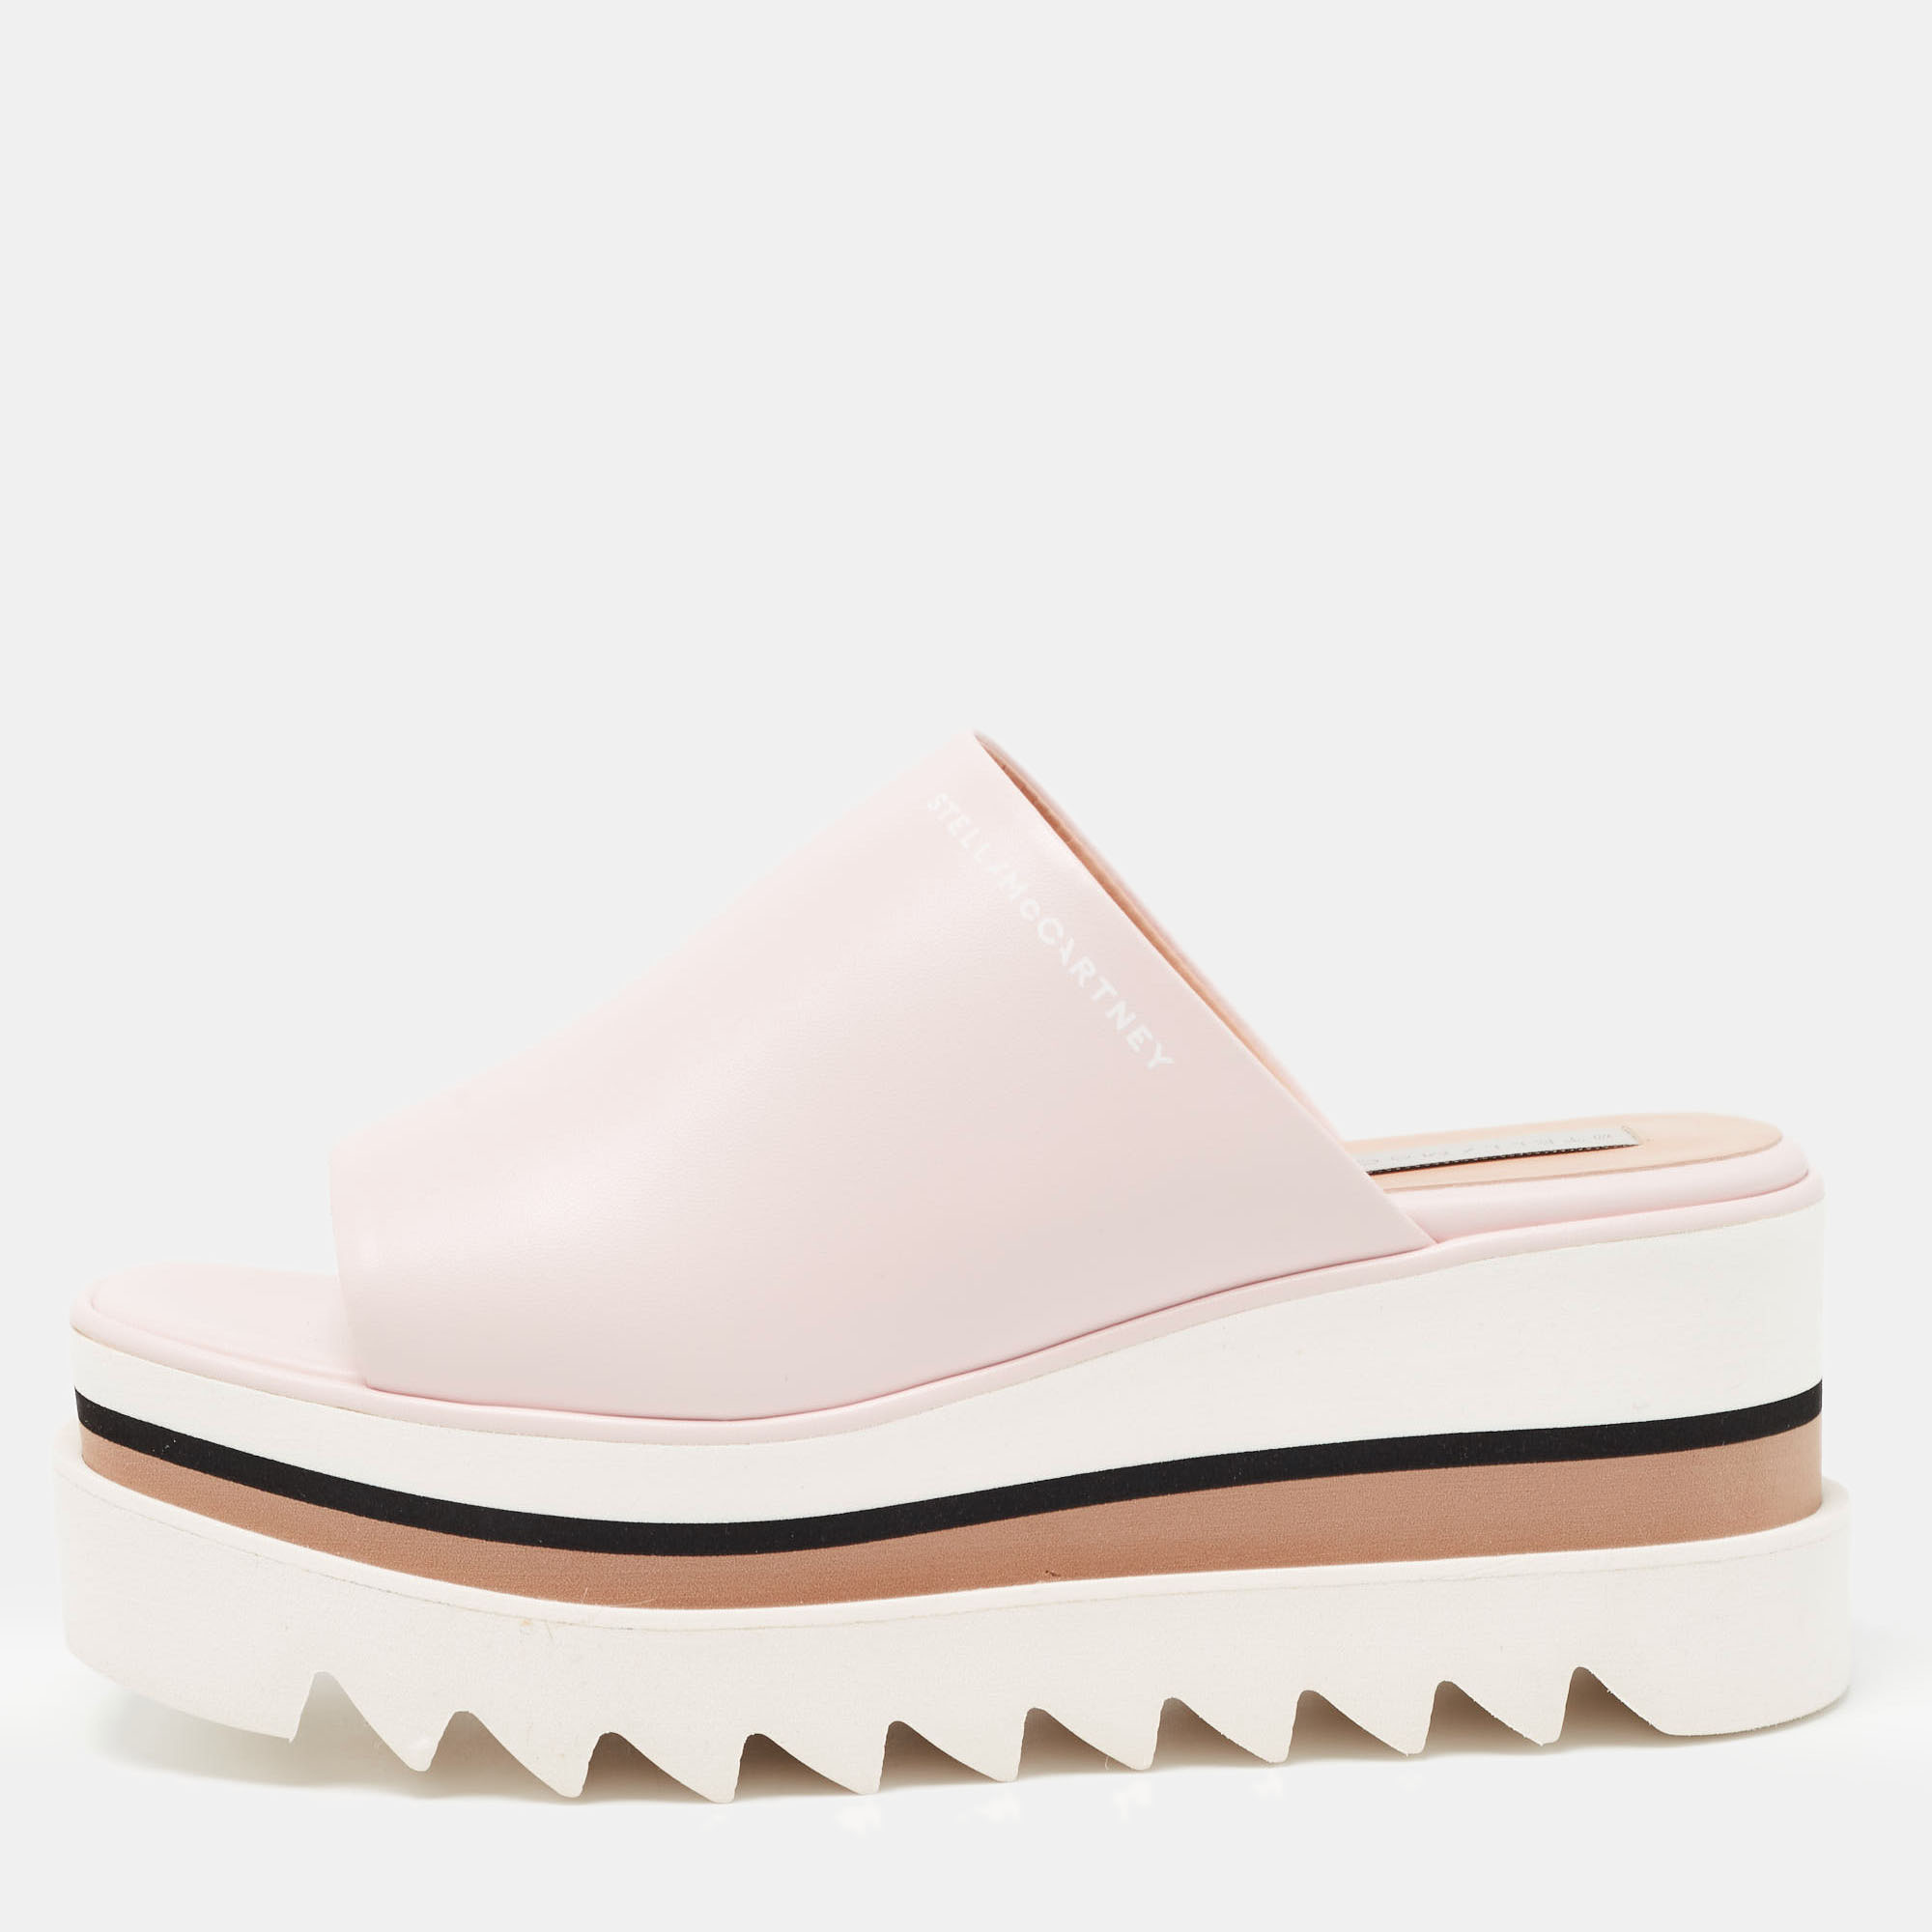 Stella mccartney pink/white faux leather sneak elyse platform sandals size 37.5